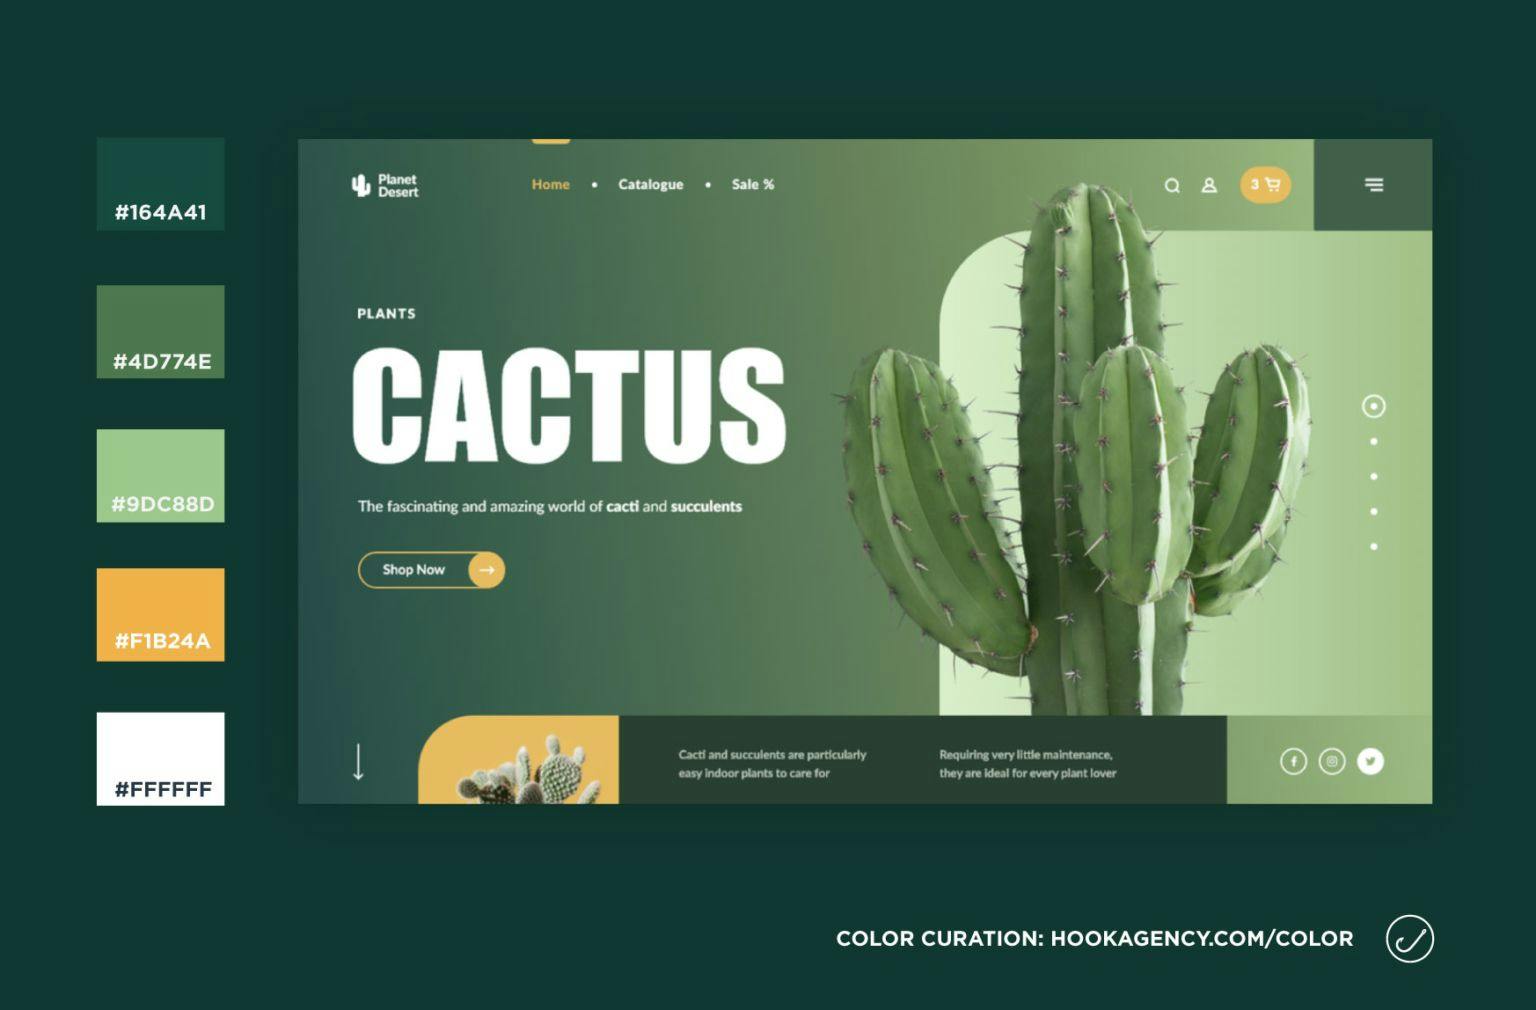 cactus-greenery-yellow-website-design-color-scheme-inspiration-2021-current-year-1-1536x1010.jpg